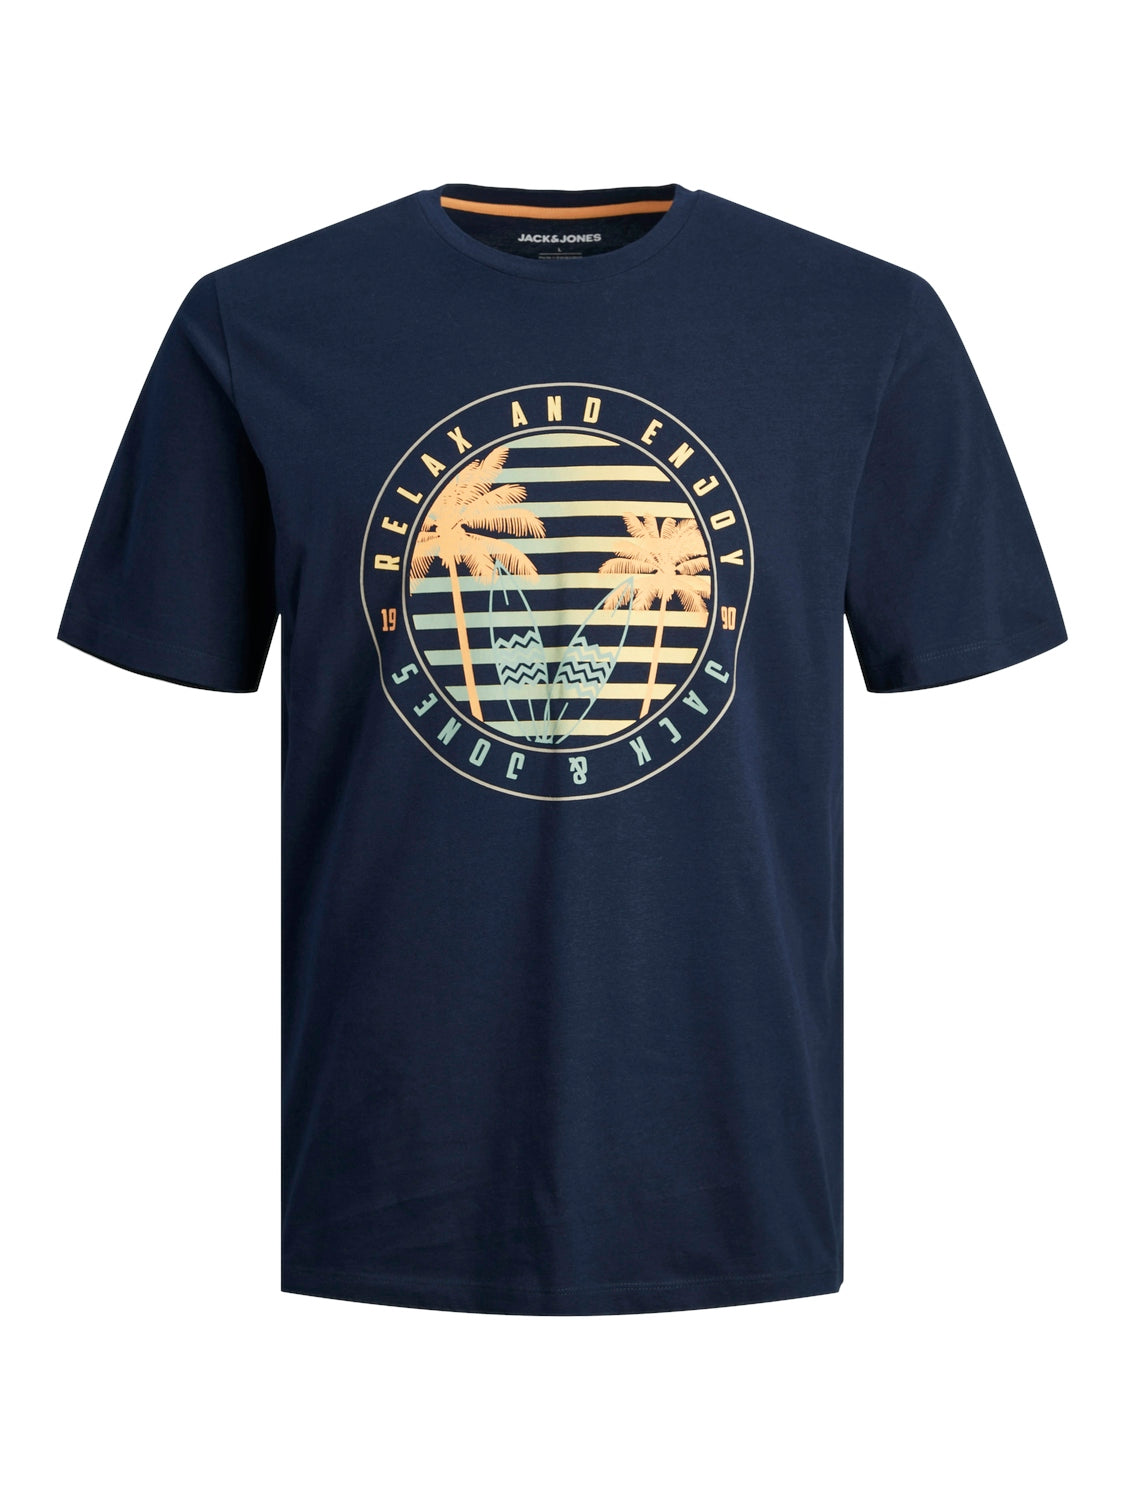 Summer vibe Crew Neck T-Shirt - Navy Blazer